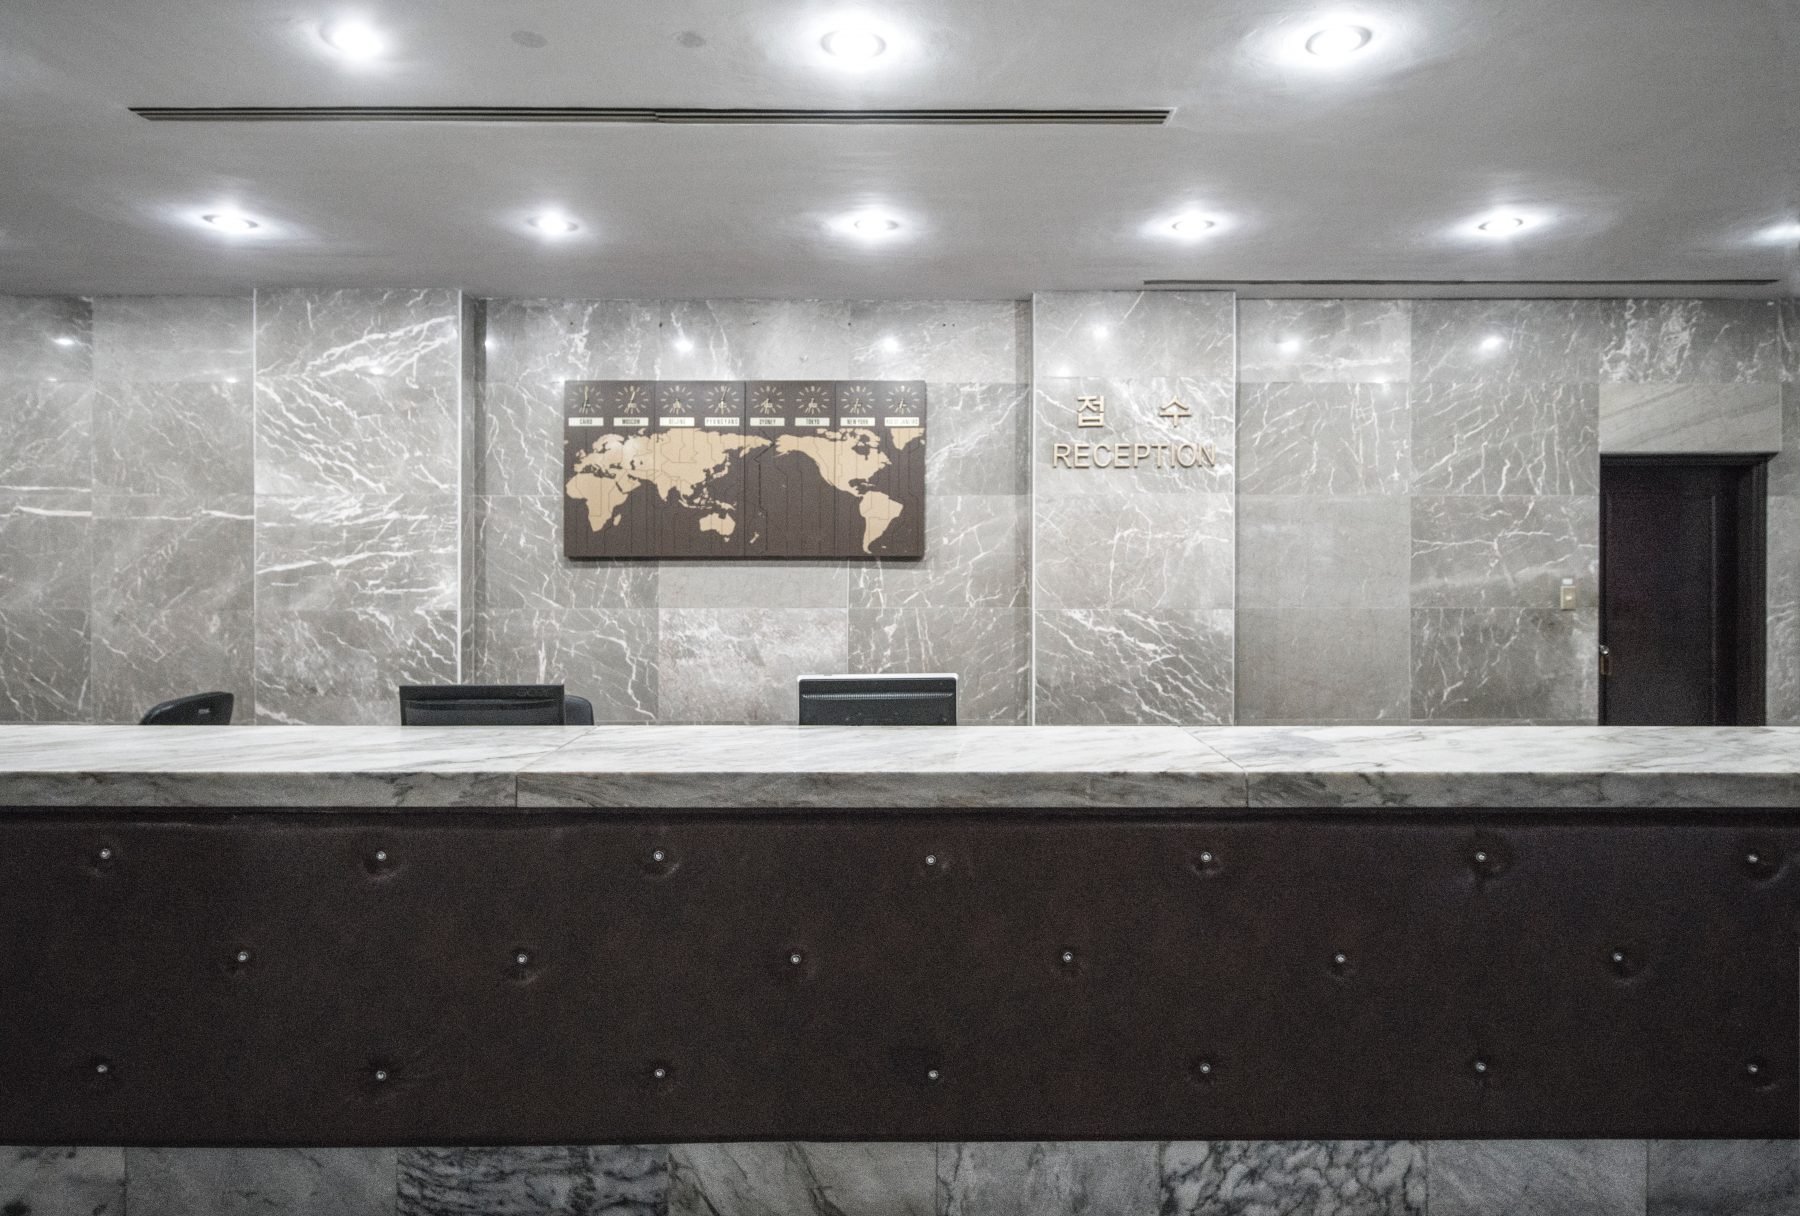 Image of reception room in Korean hotel 